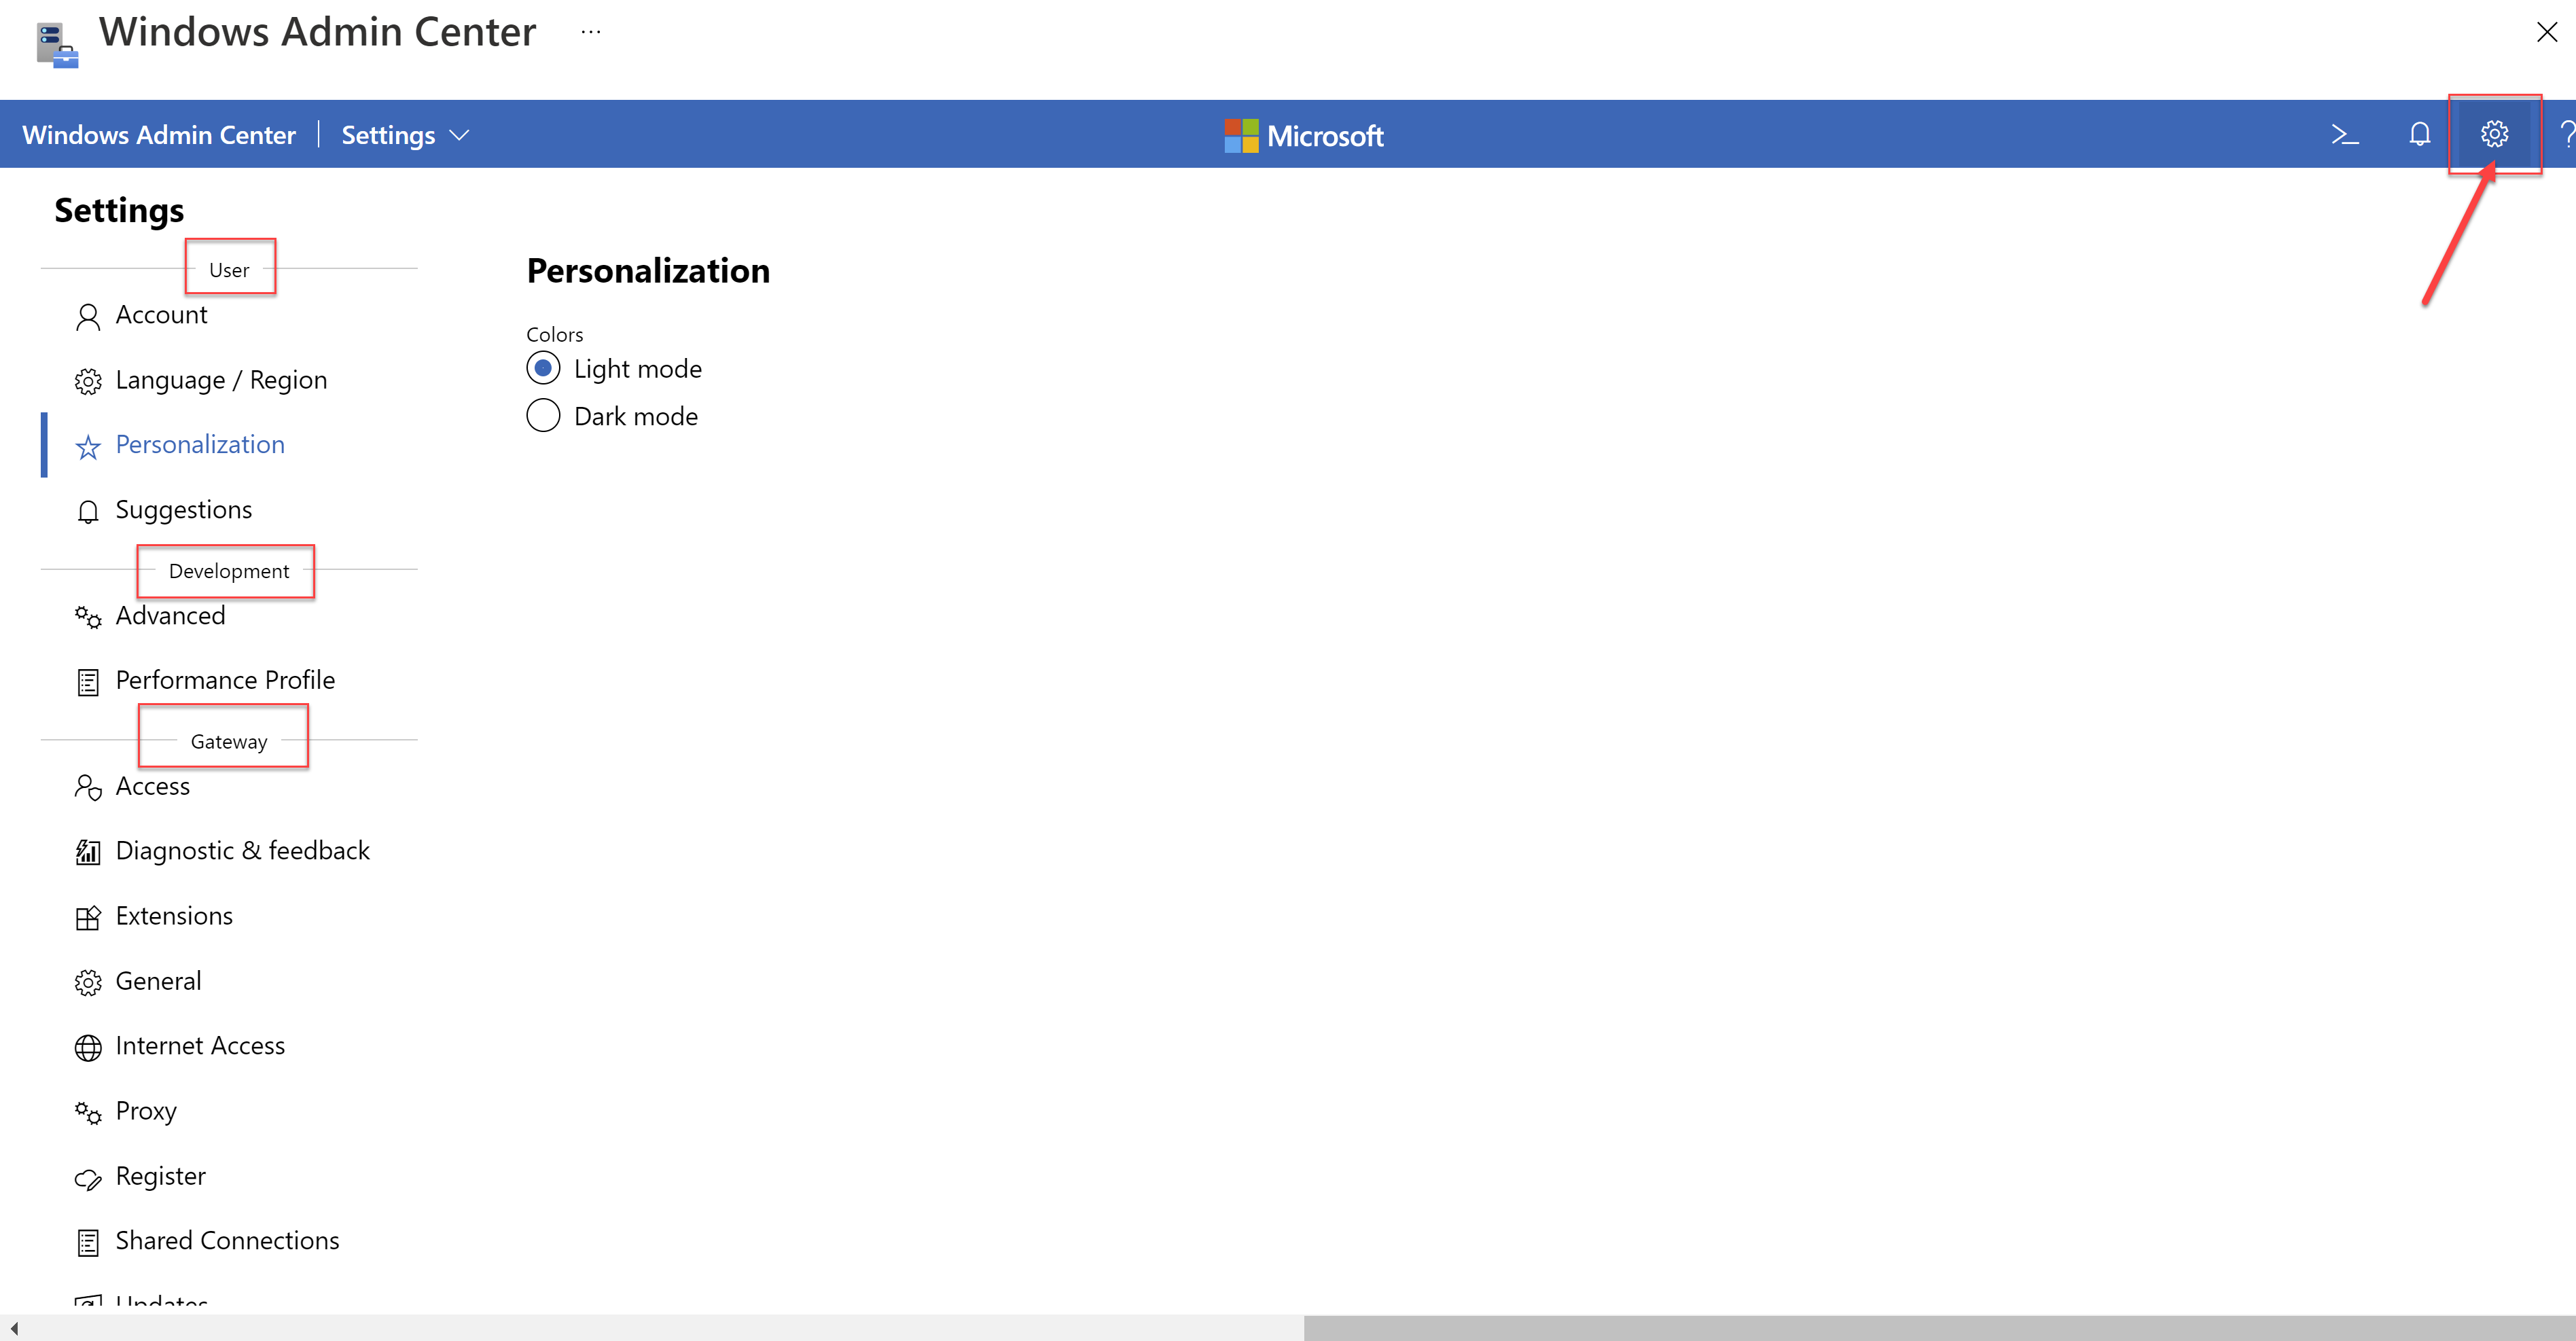 Windows Admin Center Settings